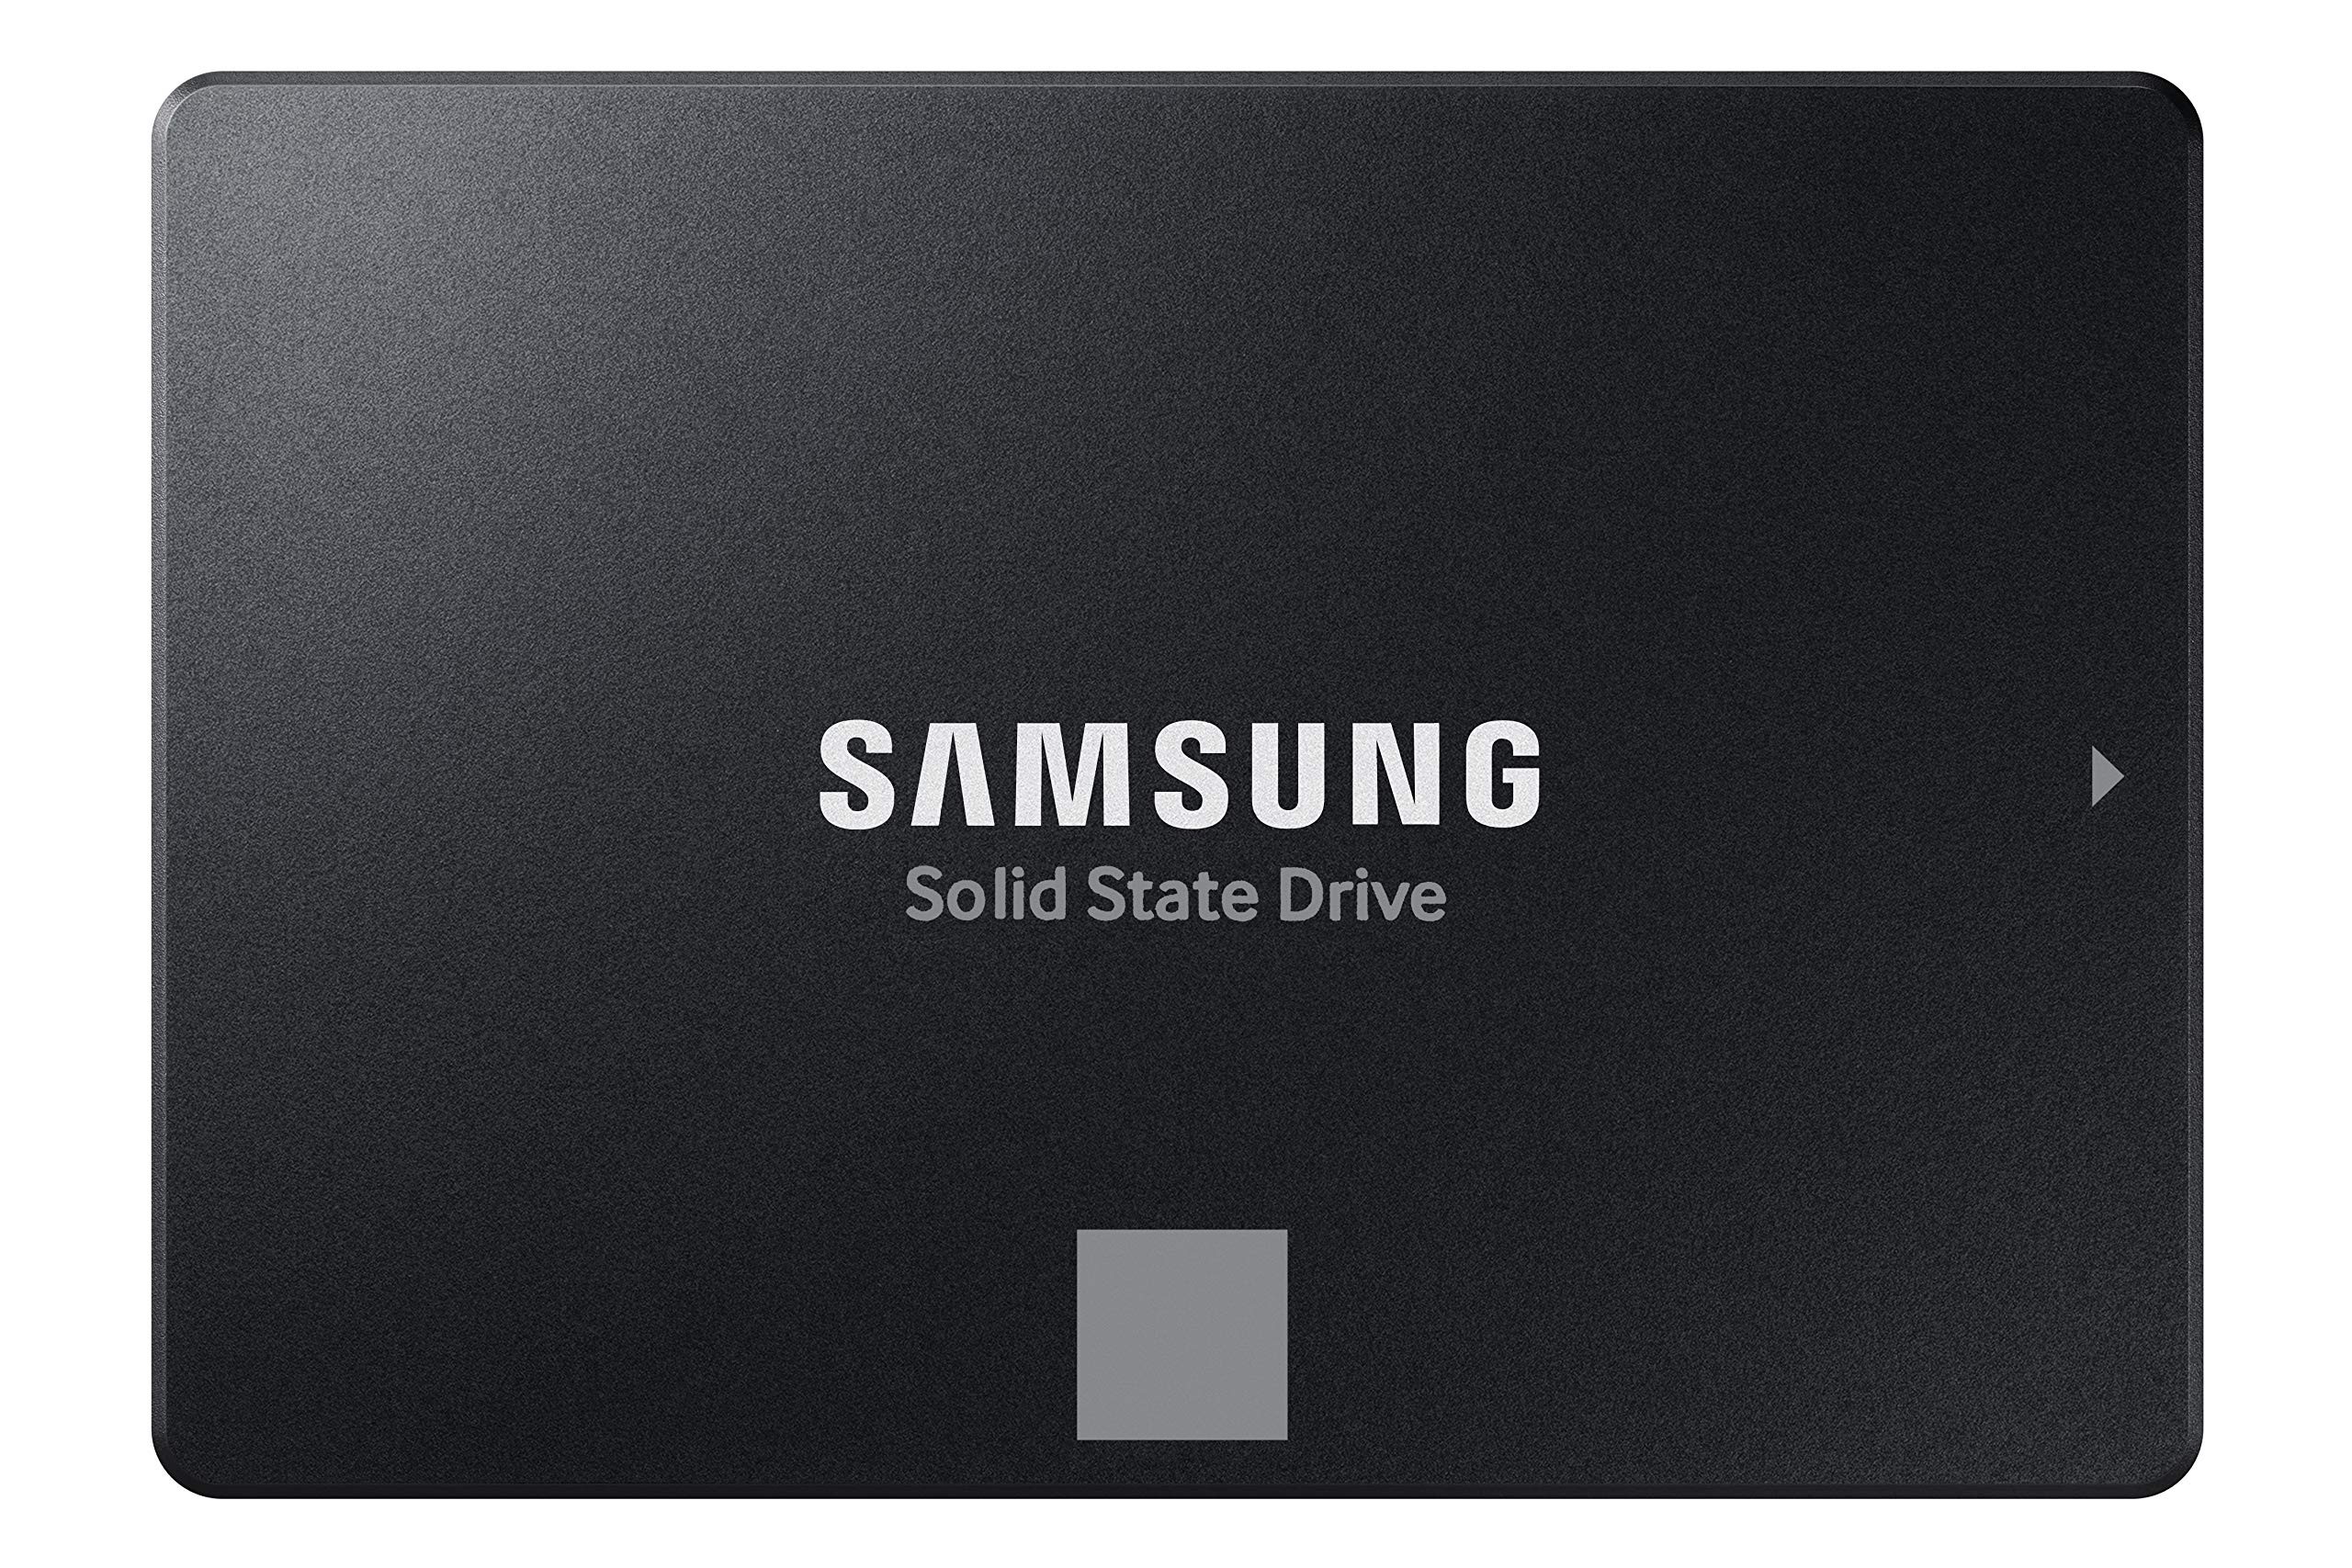 SAMSUNG 870 EVO SATA III SSD 1TB 2.5” Internal Solid State Drive $51 at Amazon.com and Newegg.com